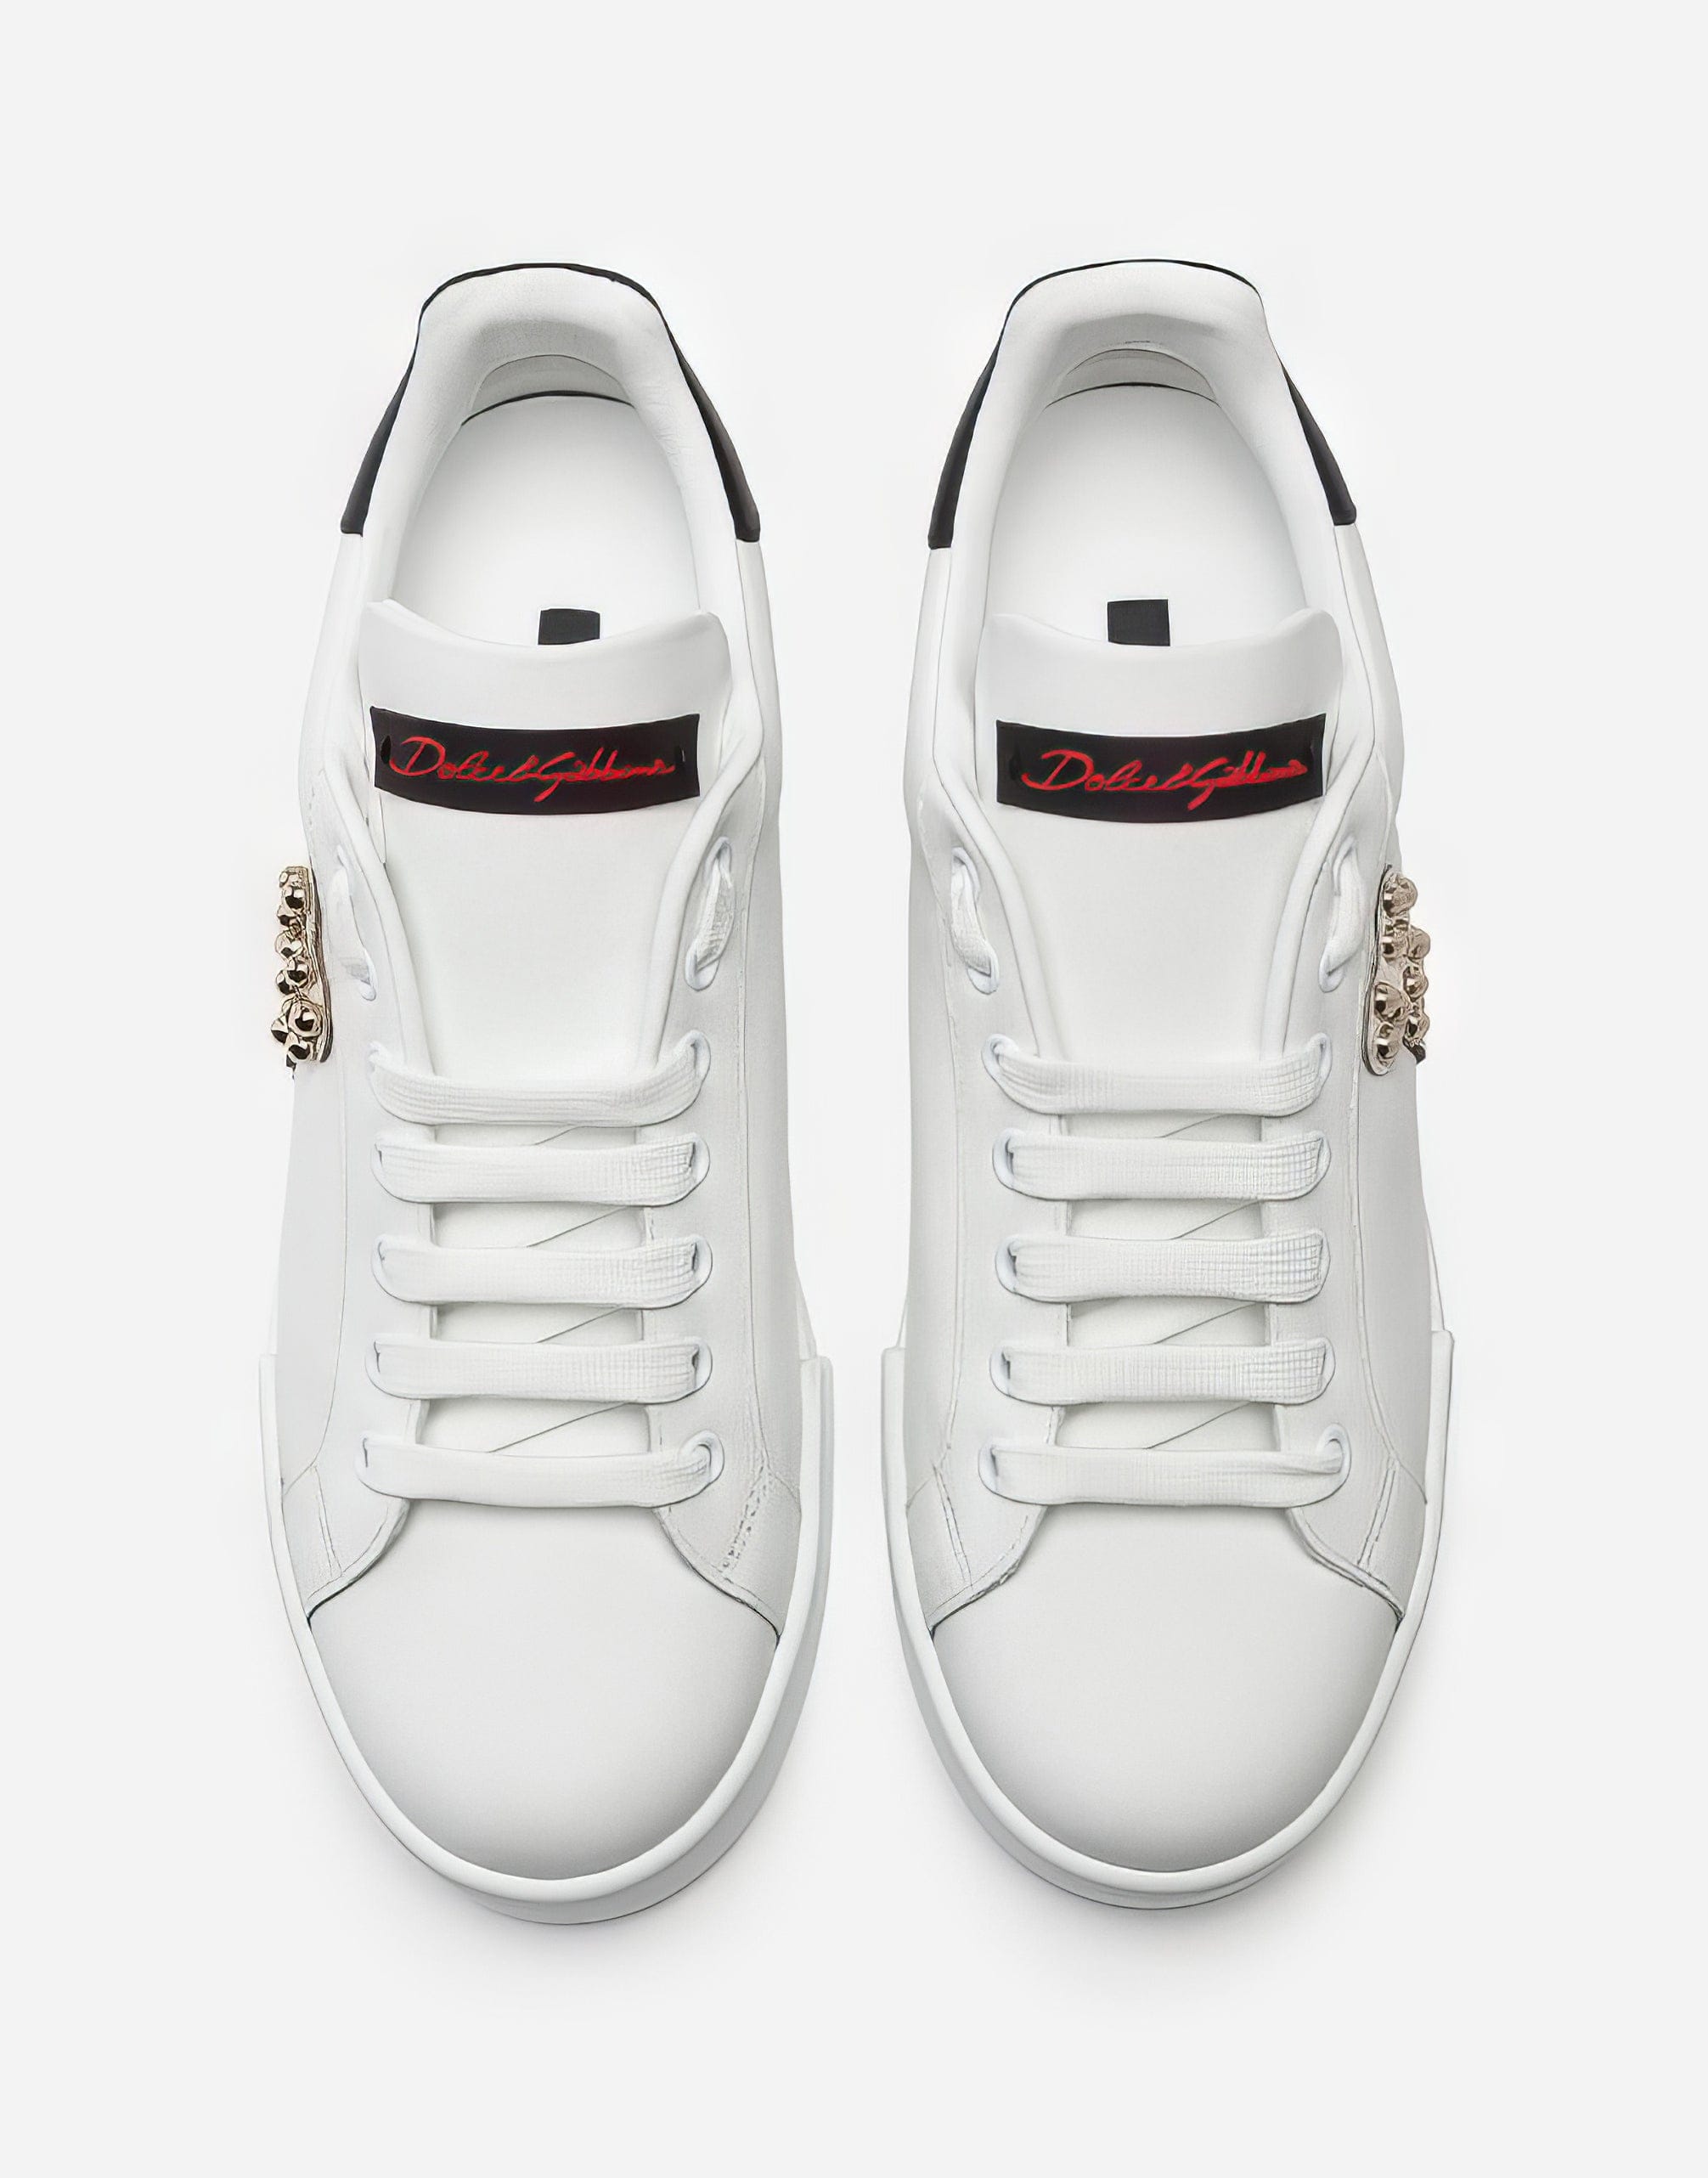 Dolce & Gabbana Patches Of The Designers Portofino Sneakers